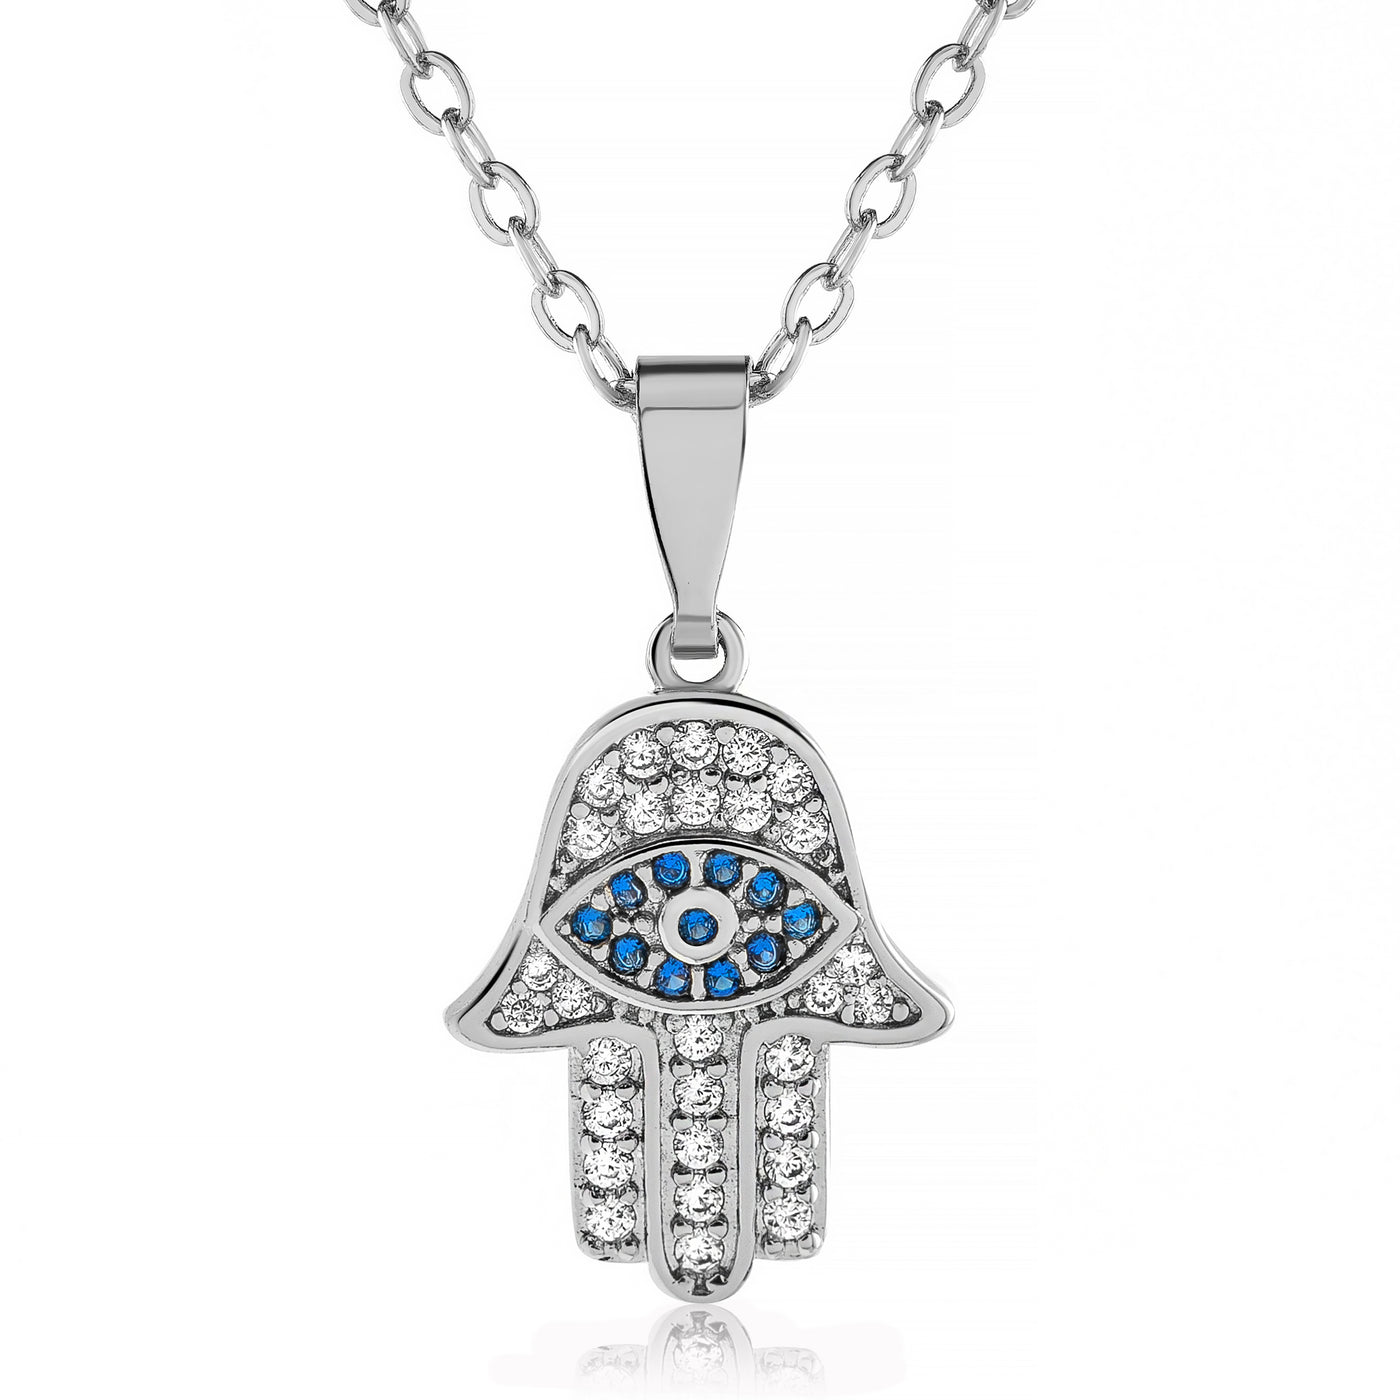 Hamsa Necklace with a Minimalist Design - Adi